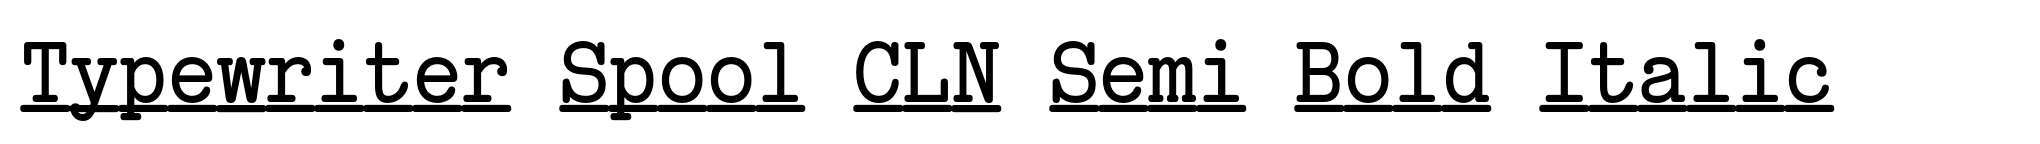 Typewriter Spool CLN Semi Bold Italic image